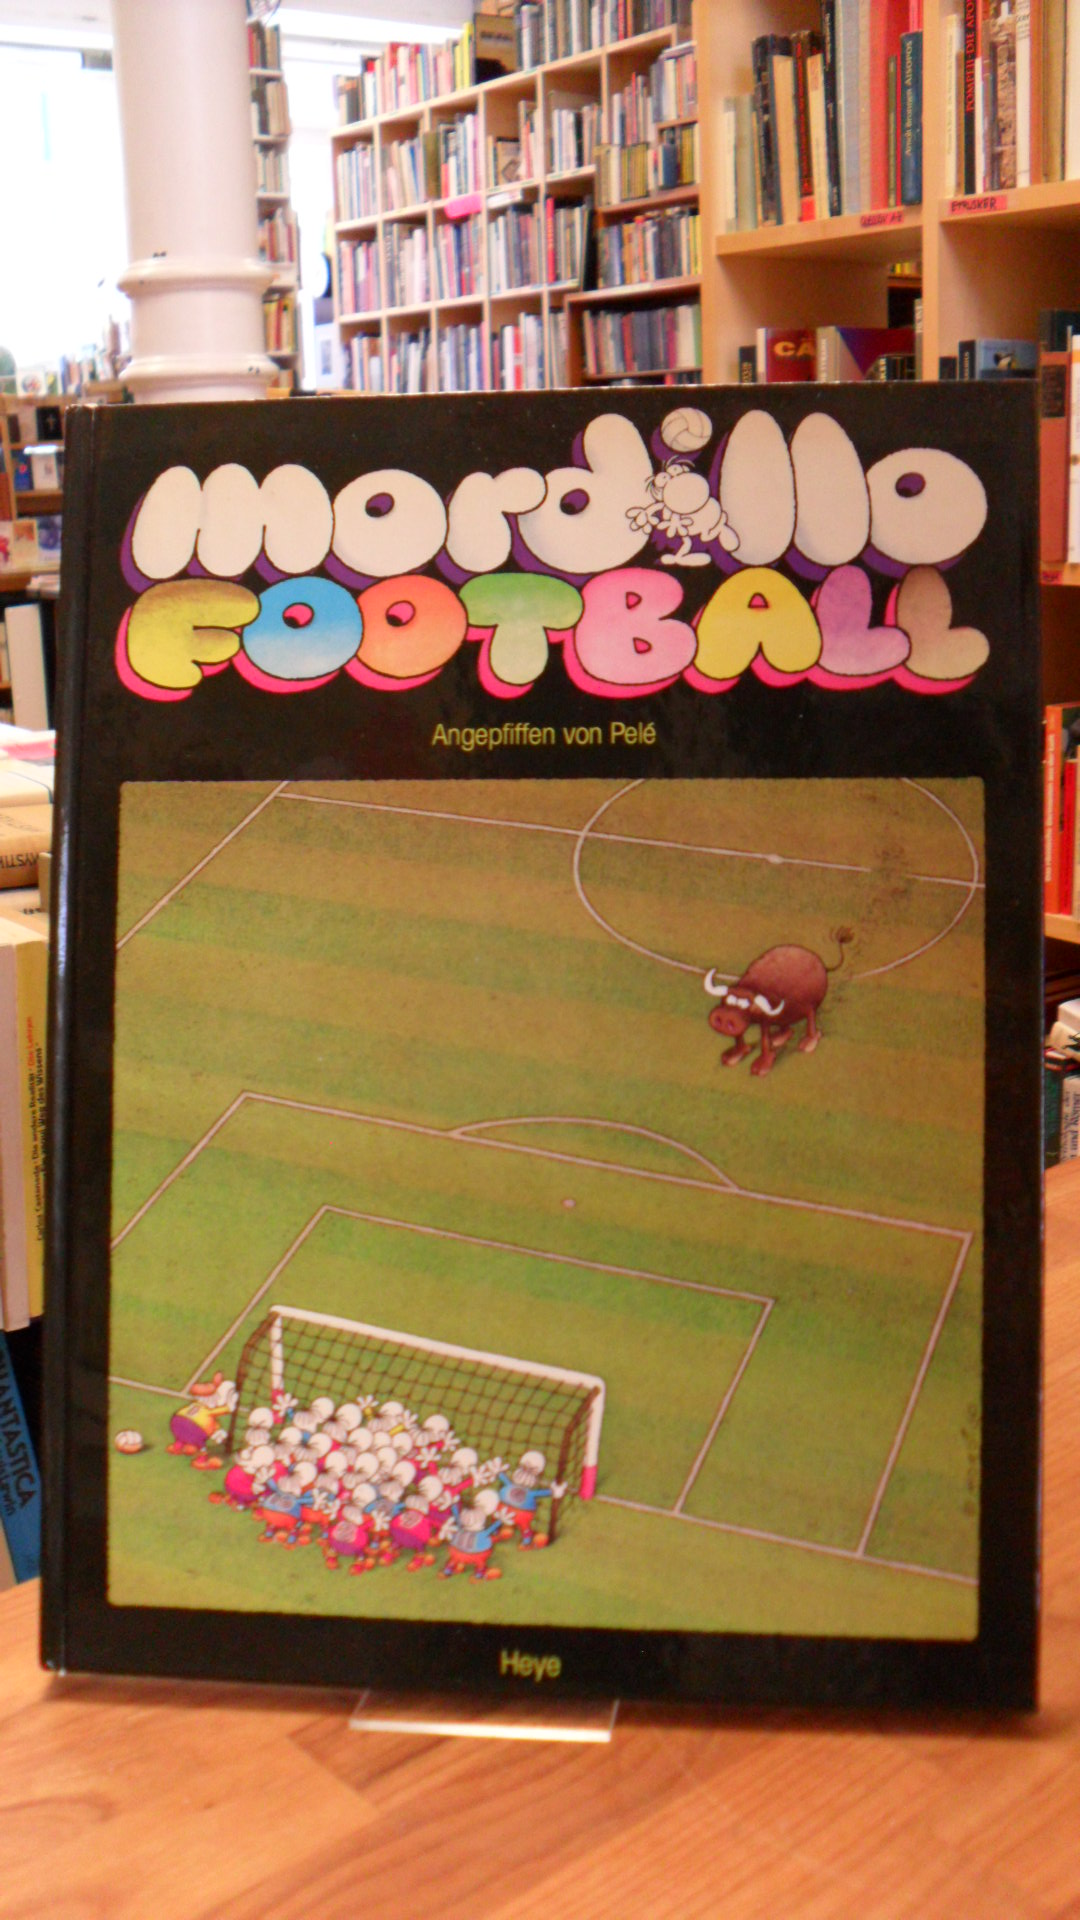 Mordillo, Football – Angepfiffen von Pelé,